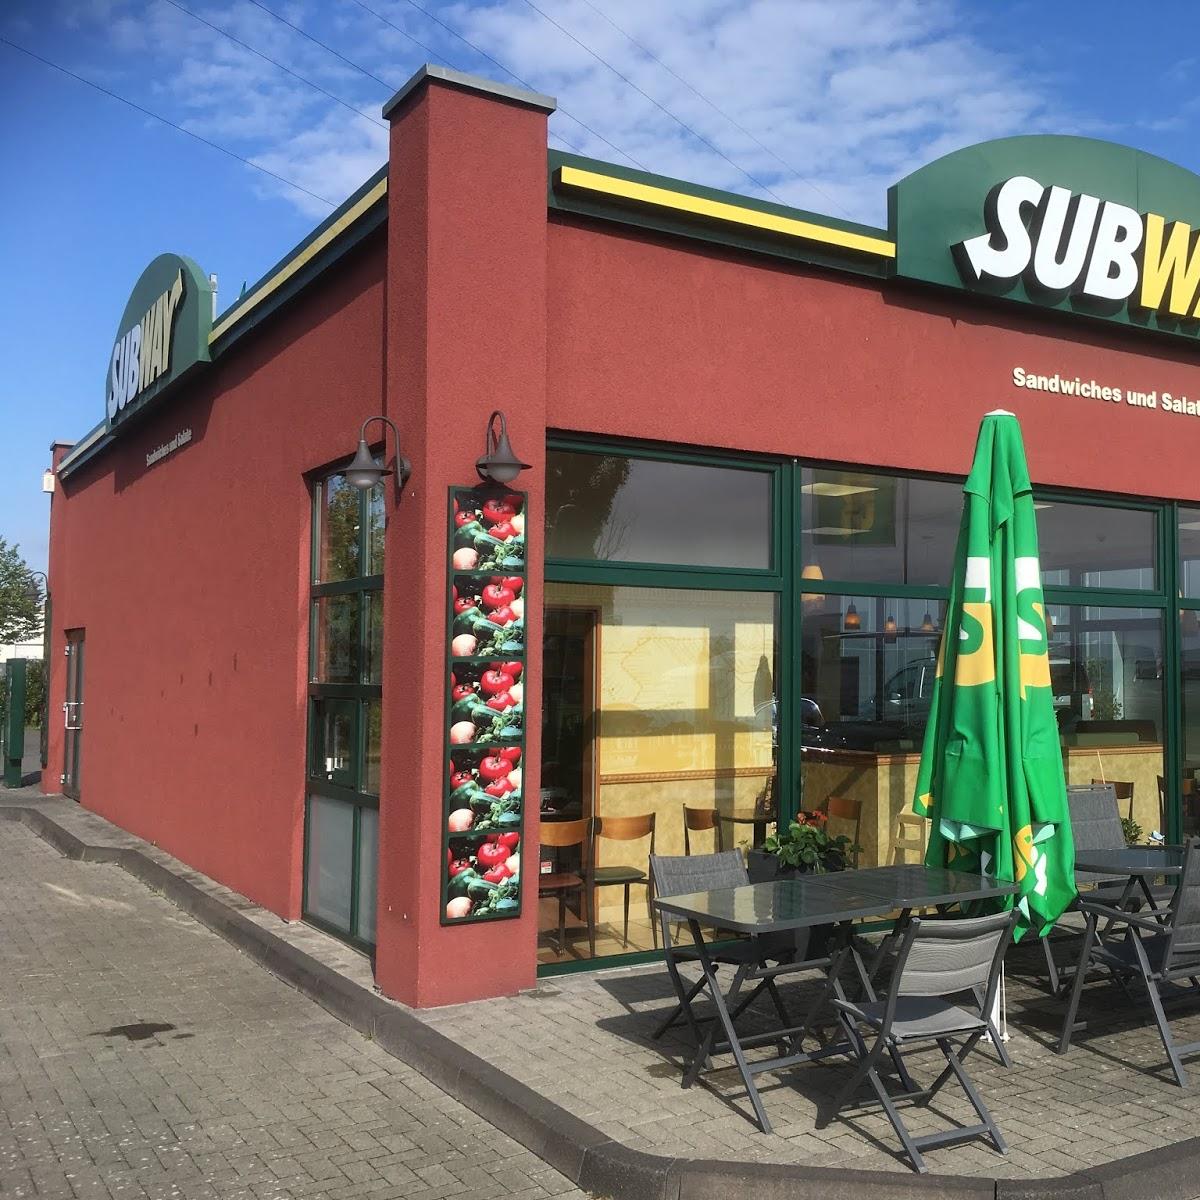 Restaurant "Subway" in Erftstadt